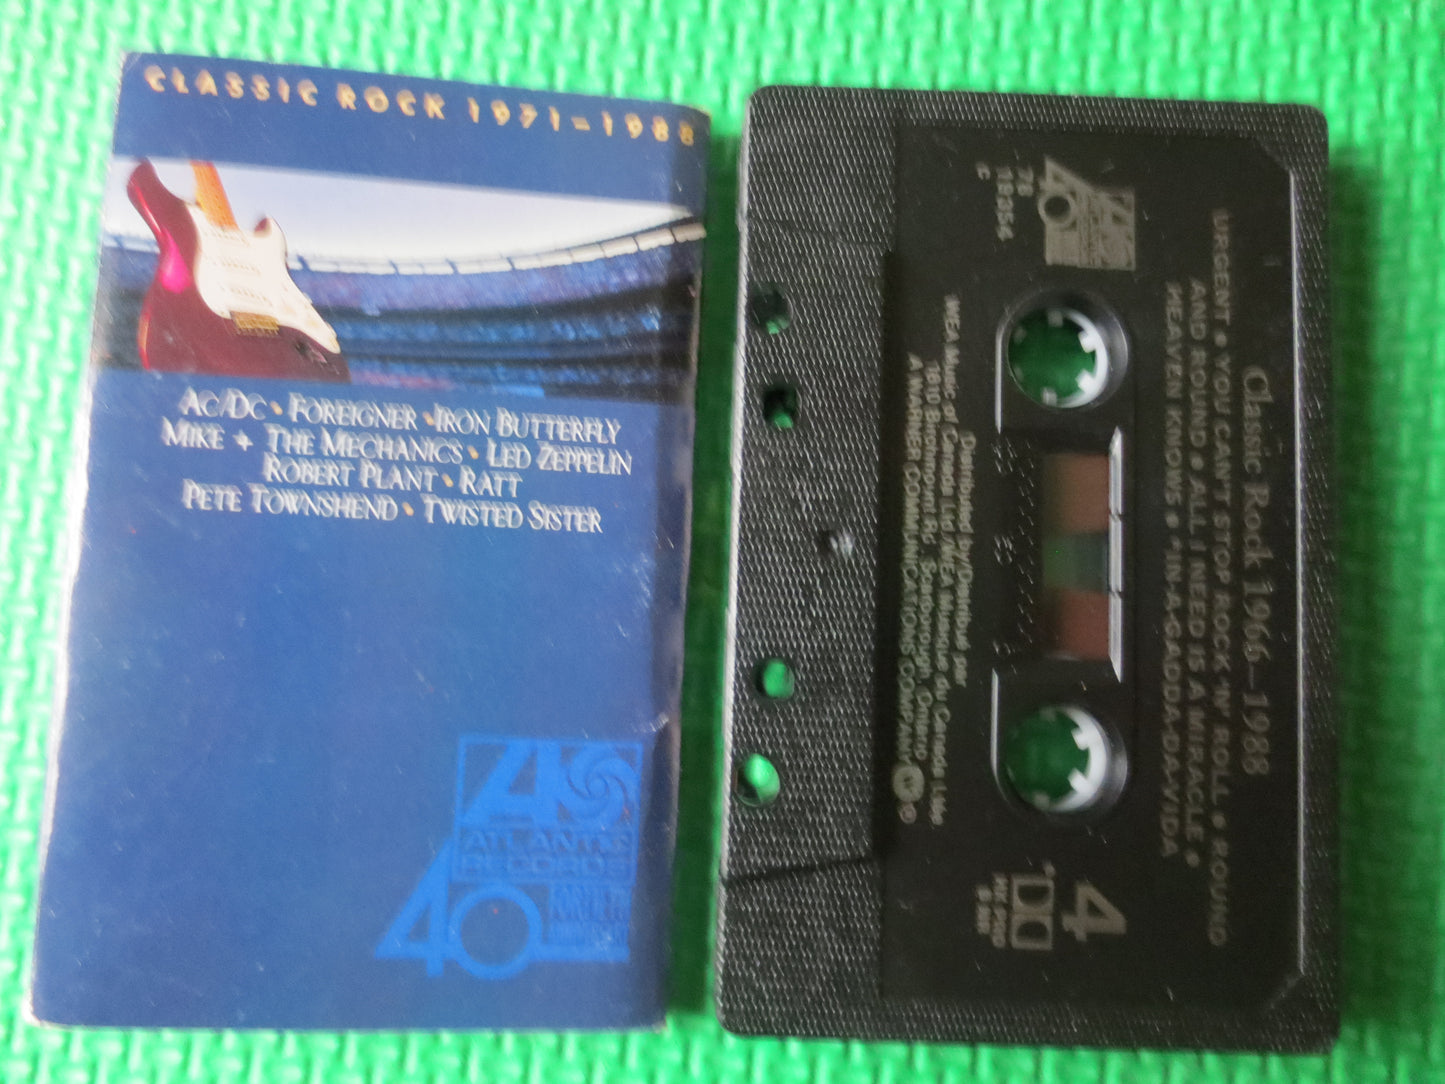 CLASSIC ROCK, 1971-1988, ROCK Cassettes, Rock Music Tape, Tapes, Tape Cassette, Music Cassette, Cassettes, 1988 Cassette